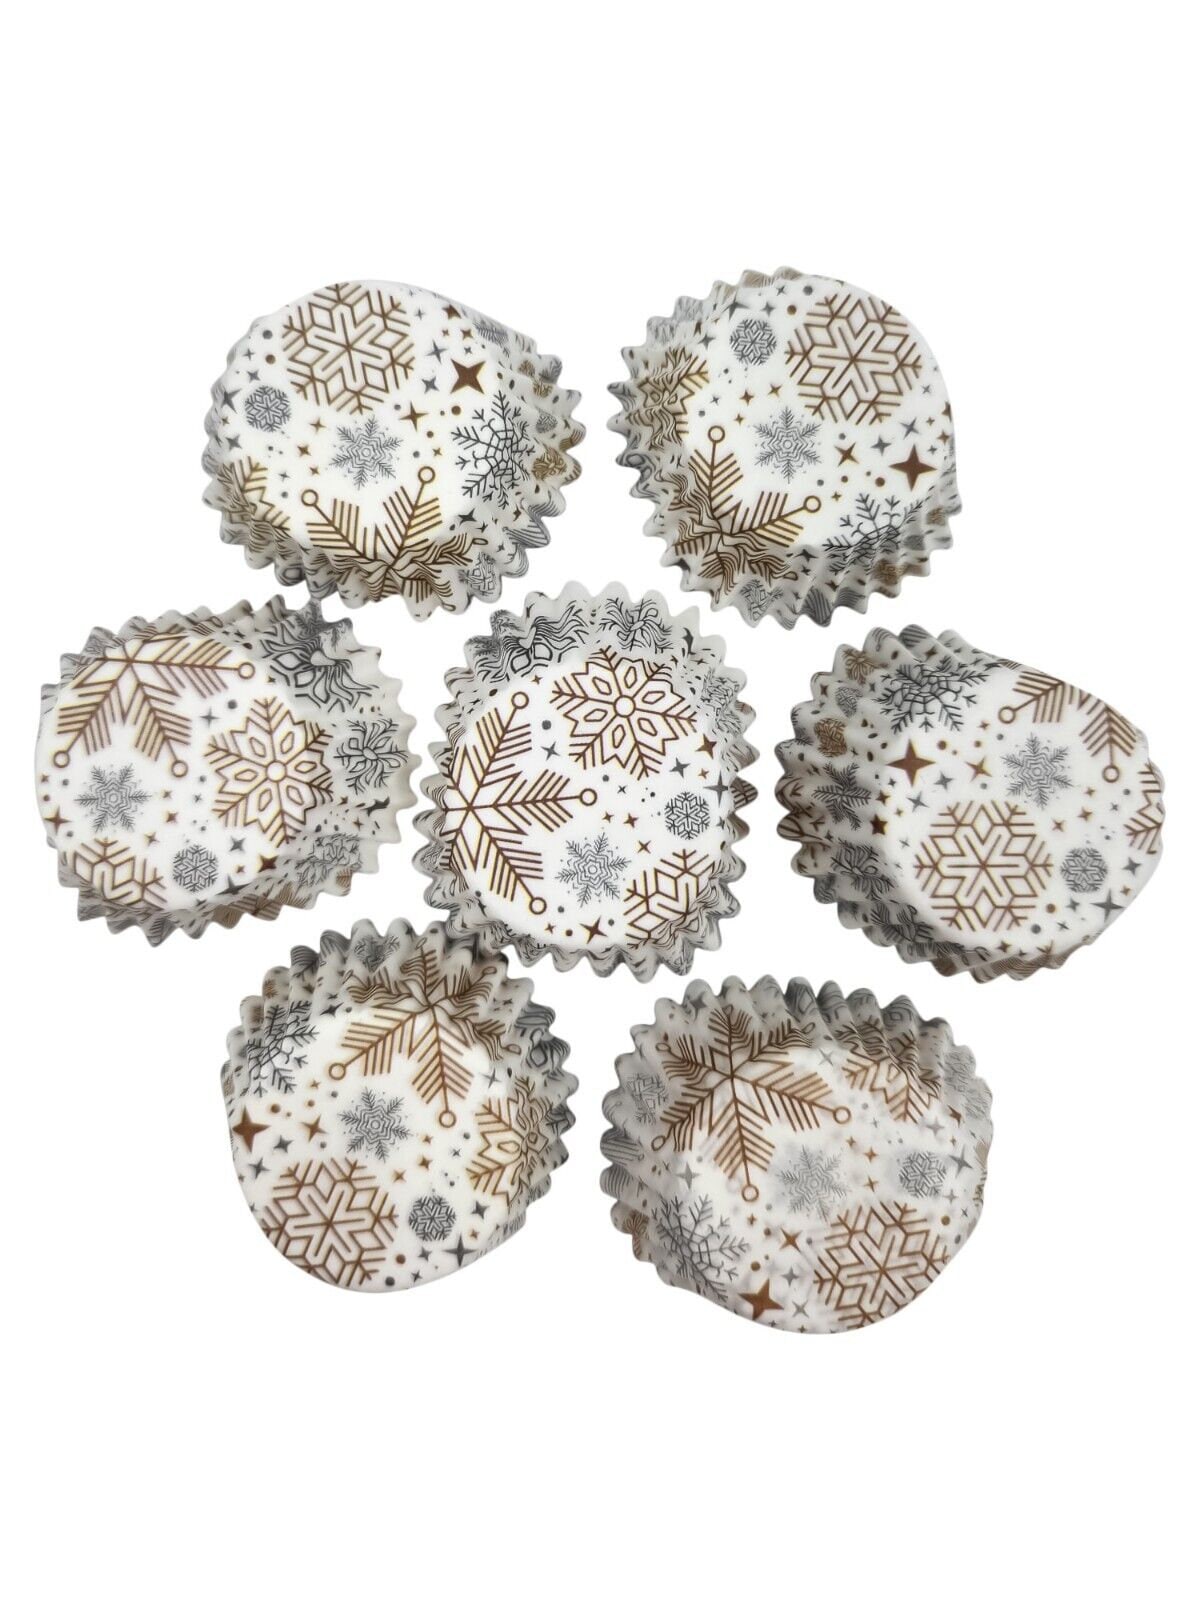 100 Mini Cupcake Cases Baking Muffin Cake Petits Fours Snowflake Pattern Keechi & co.